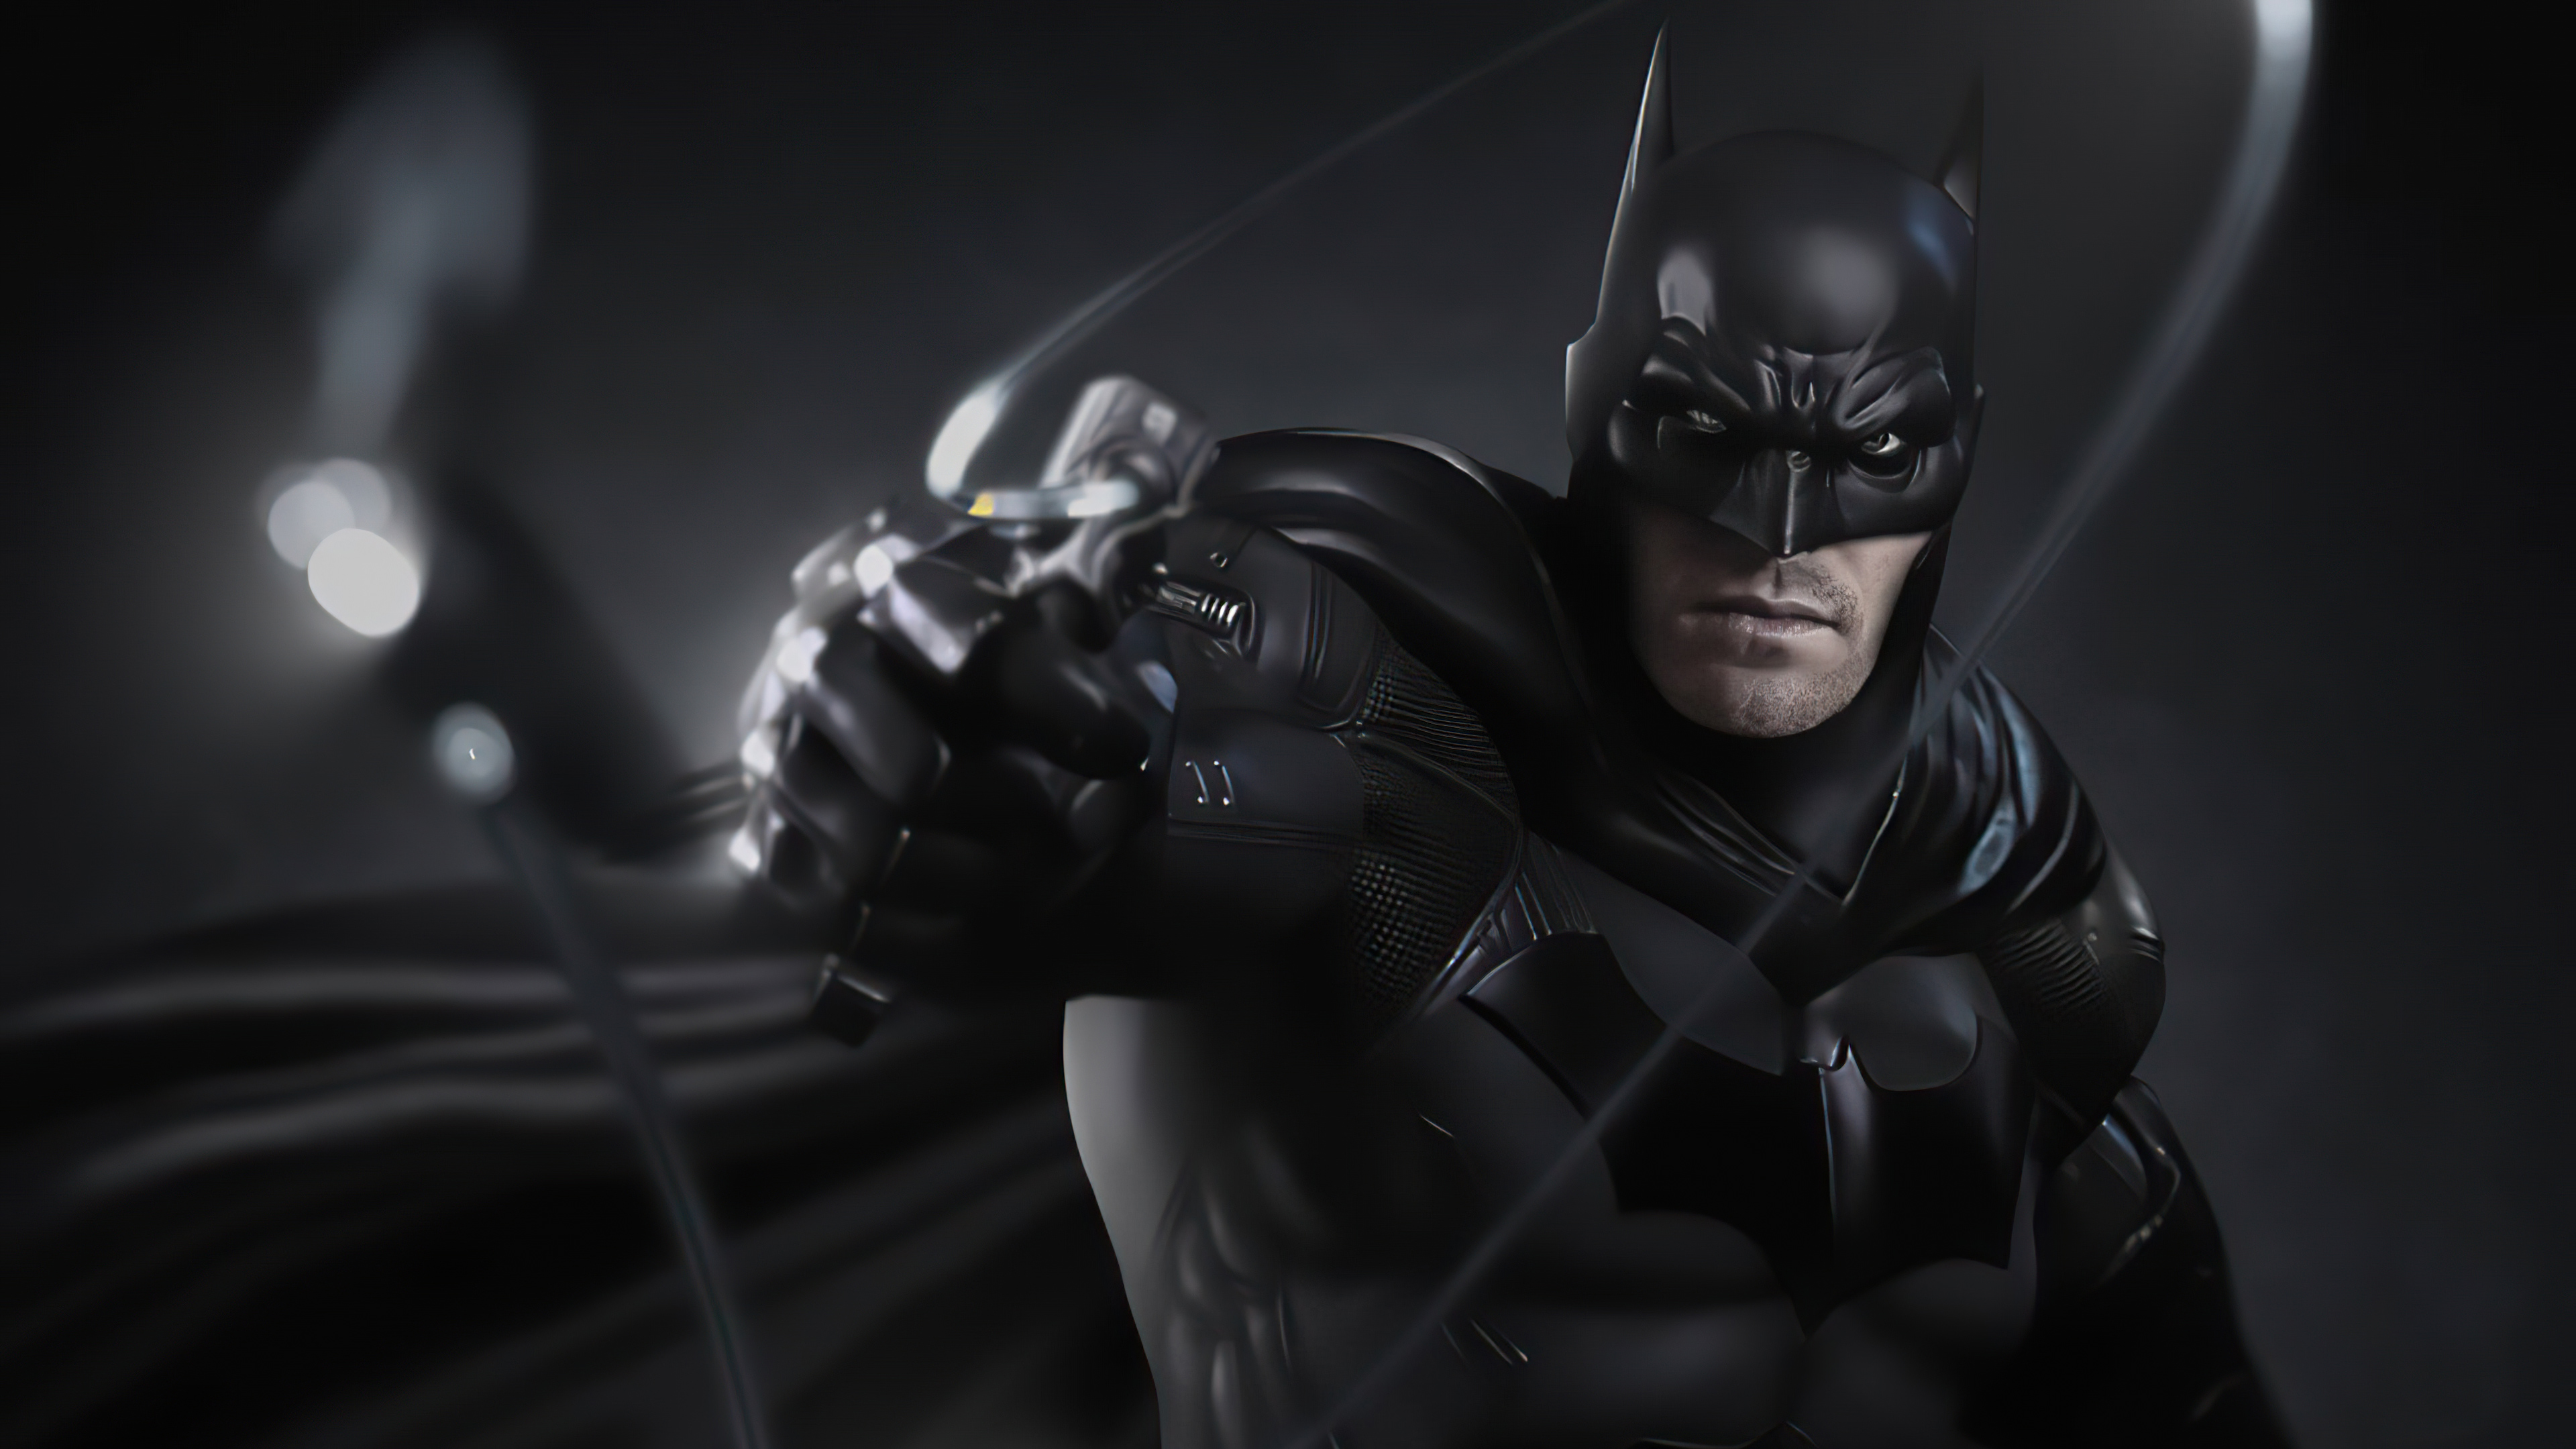 4k Batman Artwork 2020, HD Superheroes, 4k Wallpapers, Images